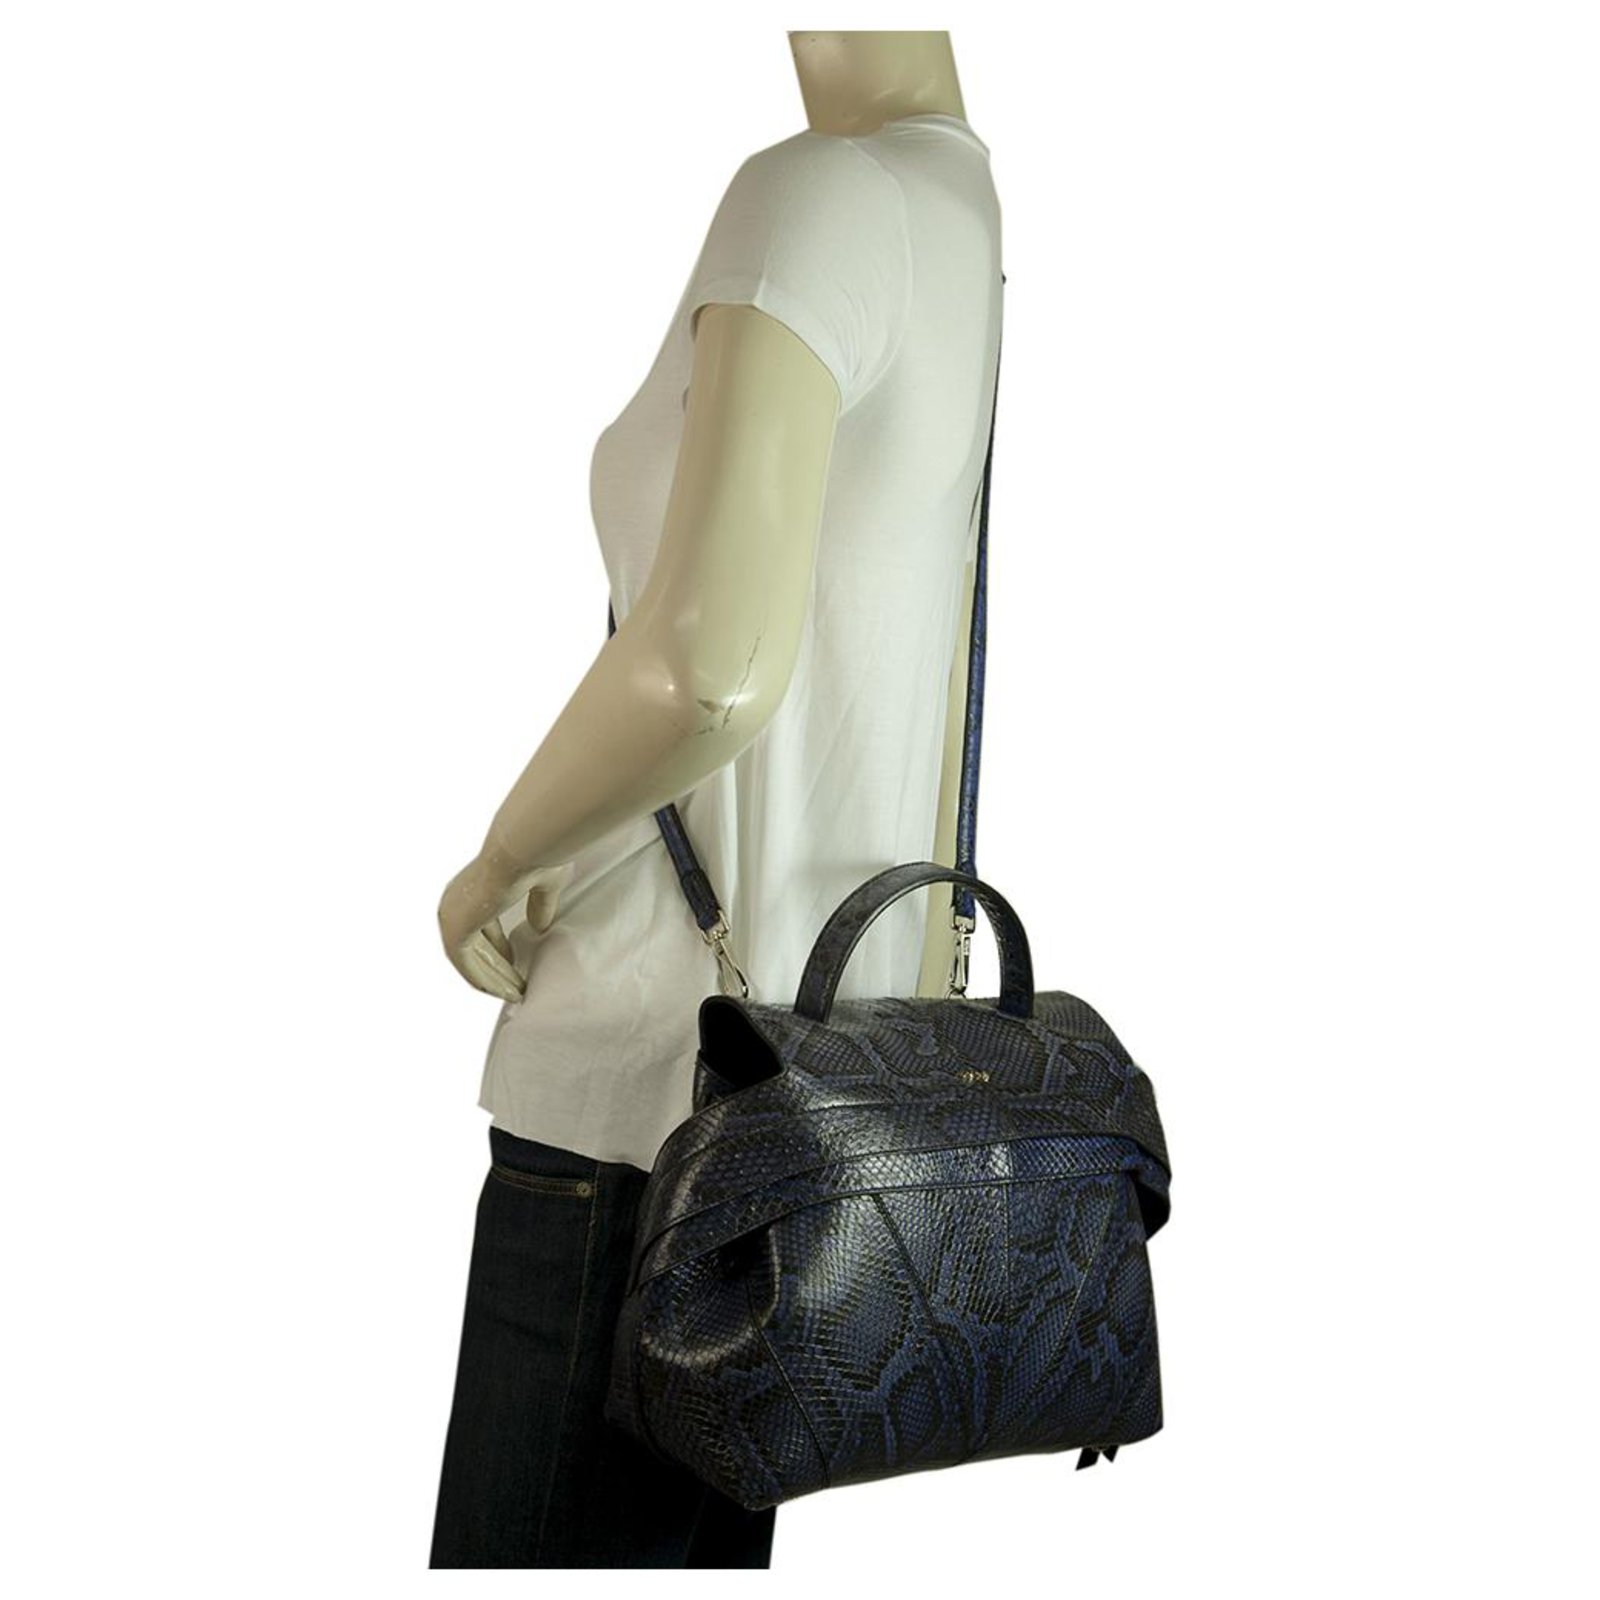 Handbags Tod's Tods Wave Blue Black Snakeskin Large Satchel Top Handle Crossbody Bag